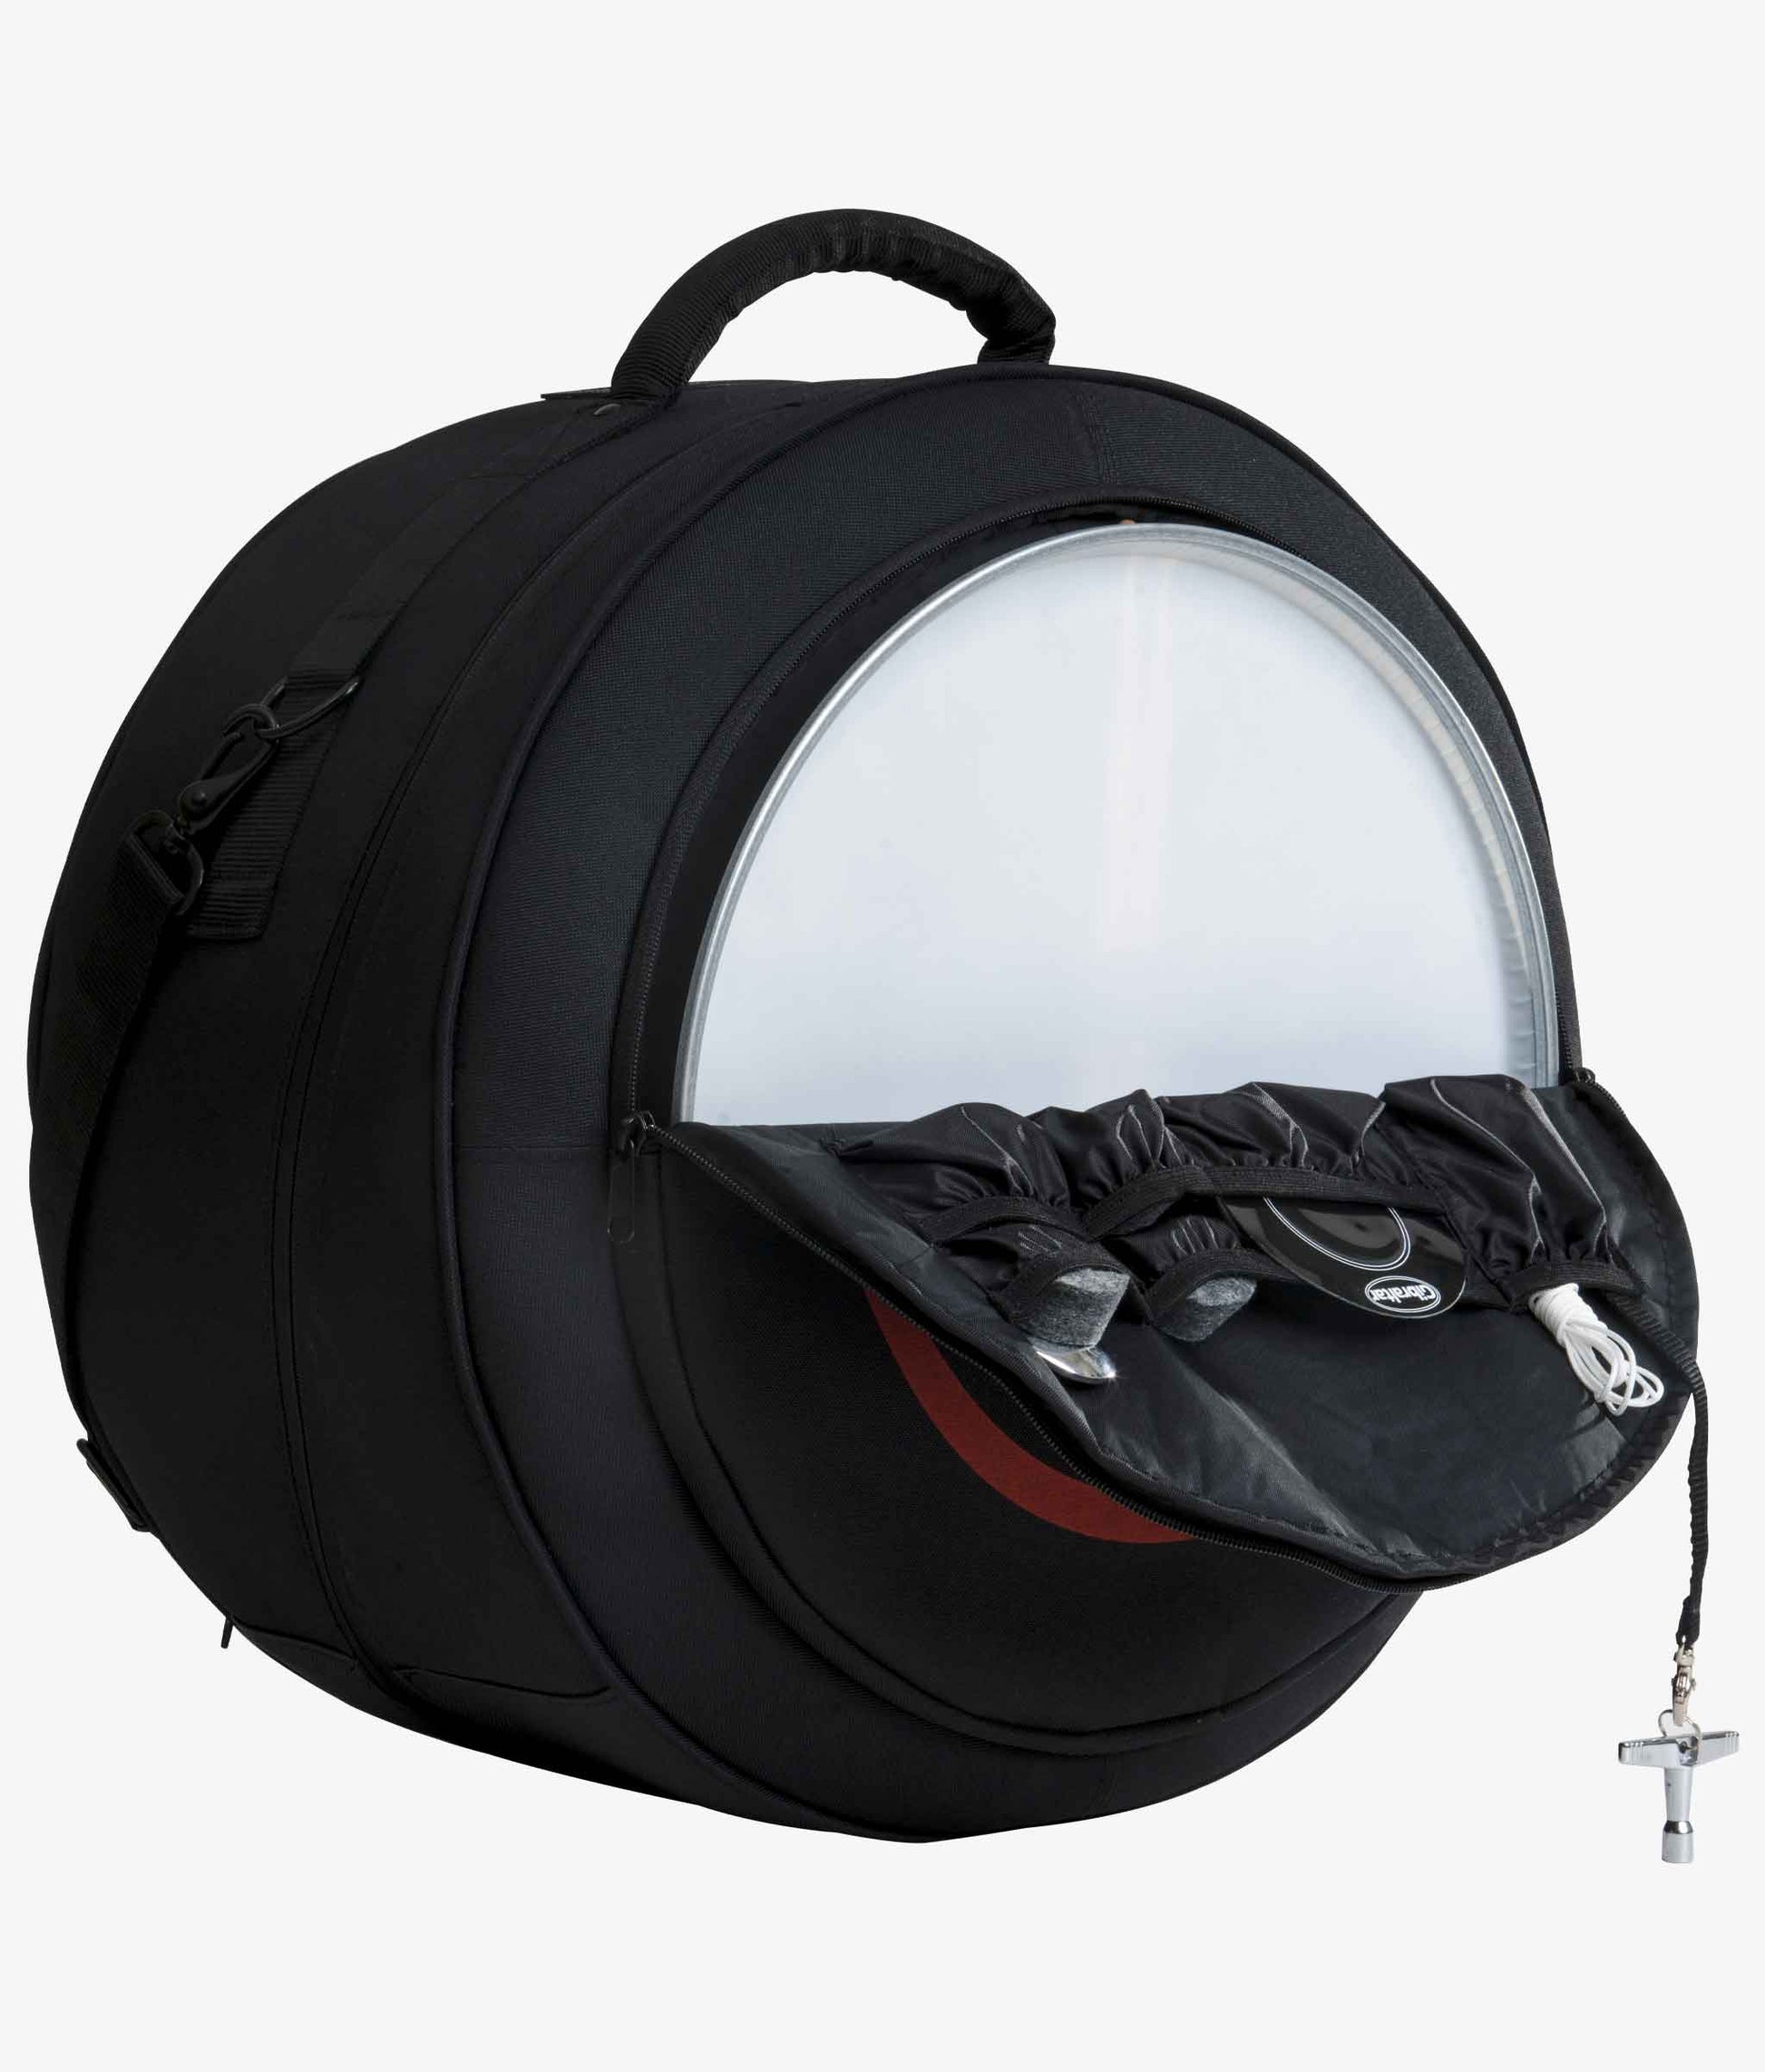  Gibraltar GPSBCZ 14" Deluxe Snare Drum Bag, Cross-Cut Zipper snare drum case